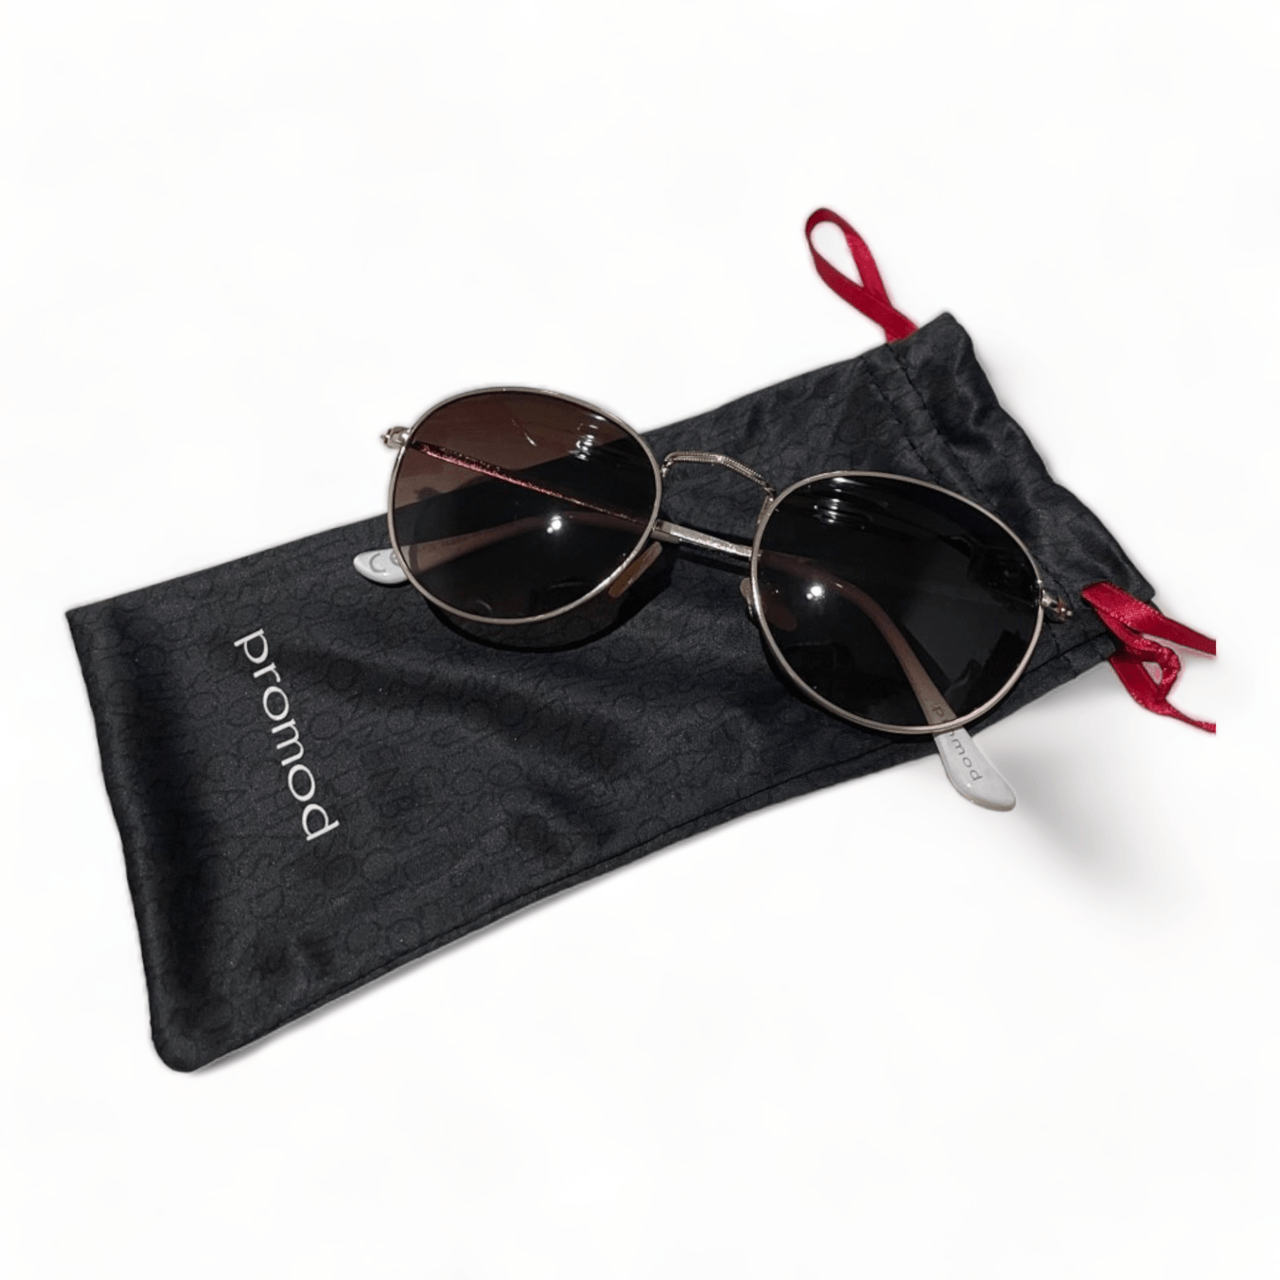 Promod Brown Sunglasses